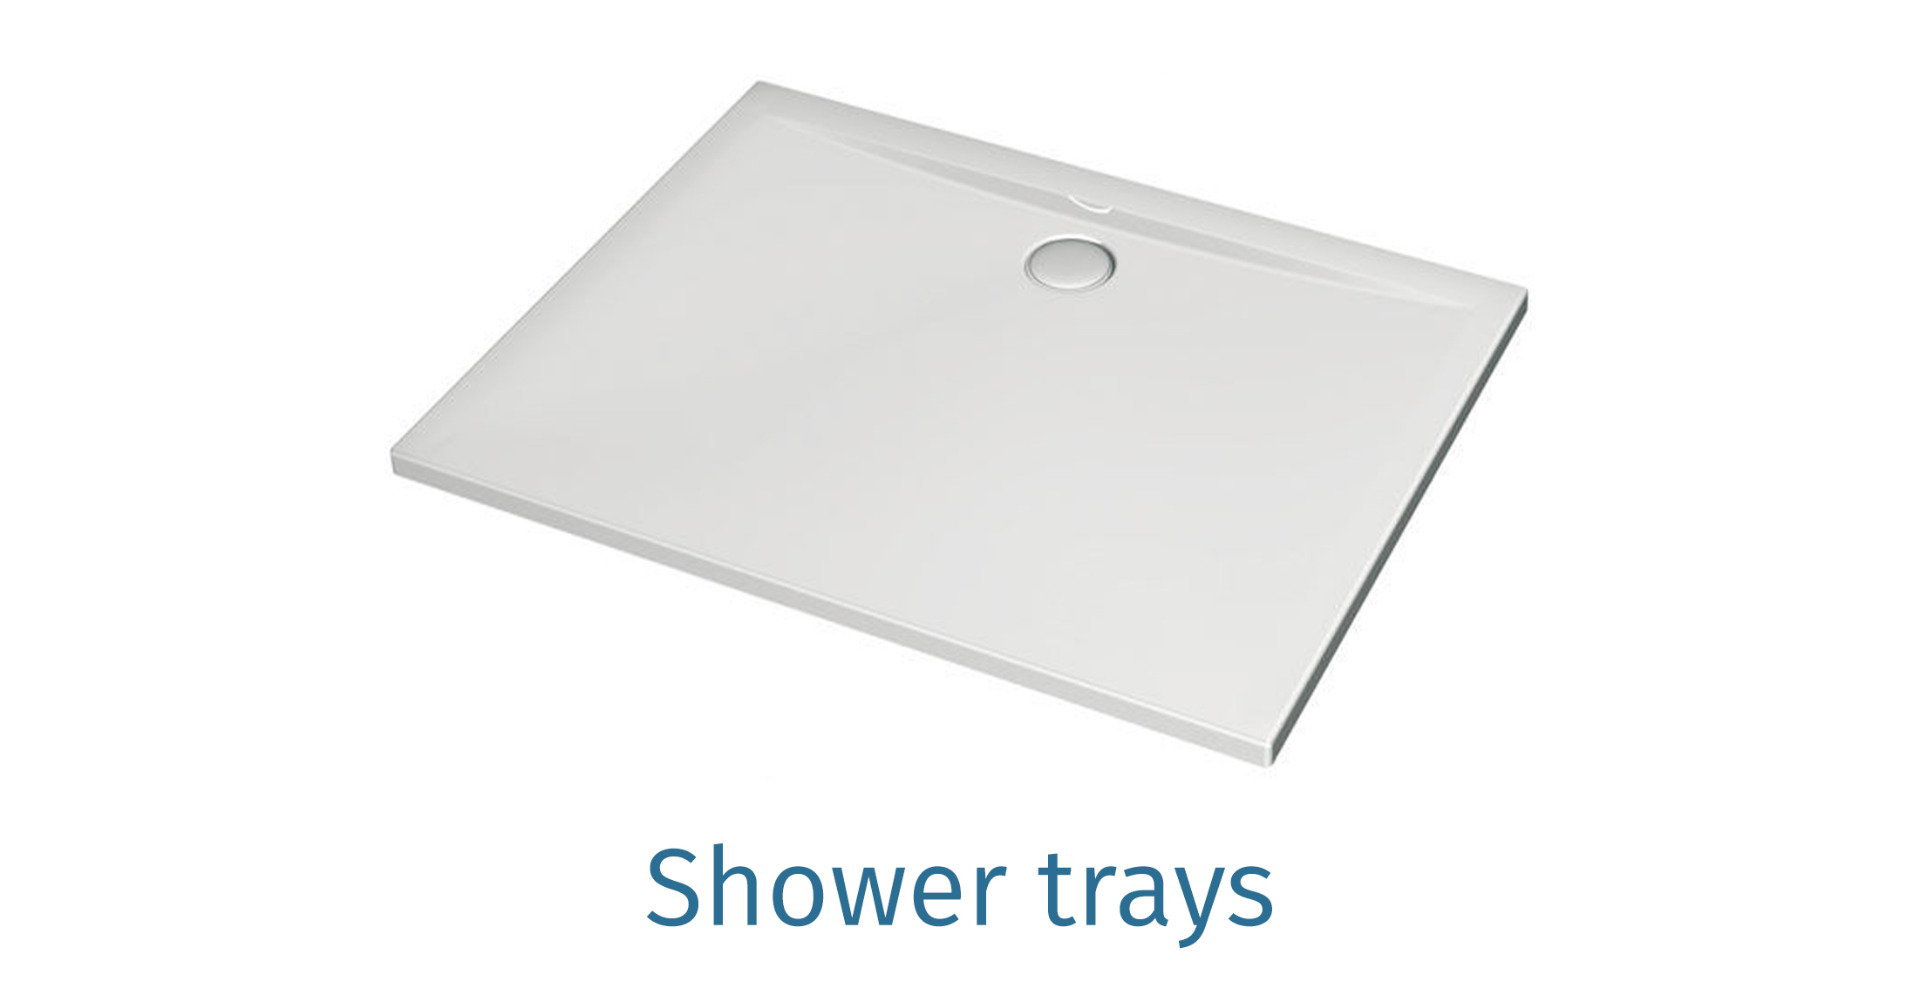 Shower trays